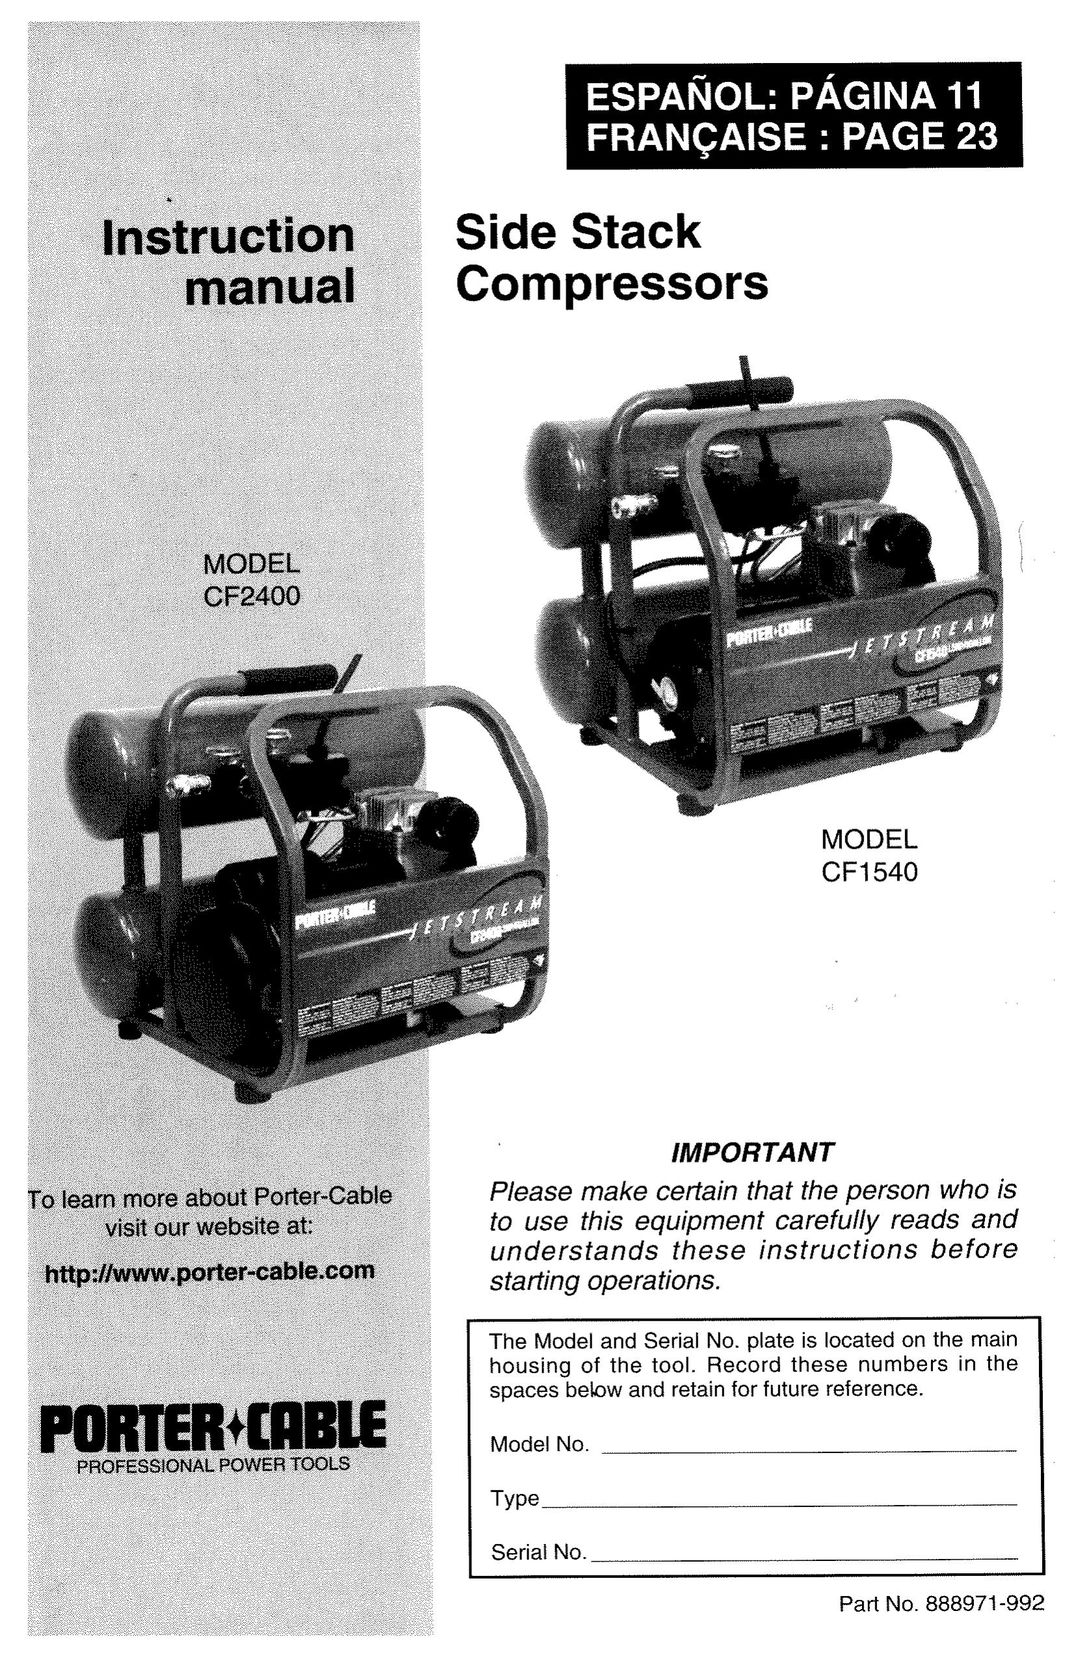 Porter-Cable 888971-992 Air Compressor User Manual